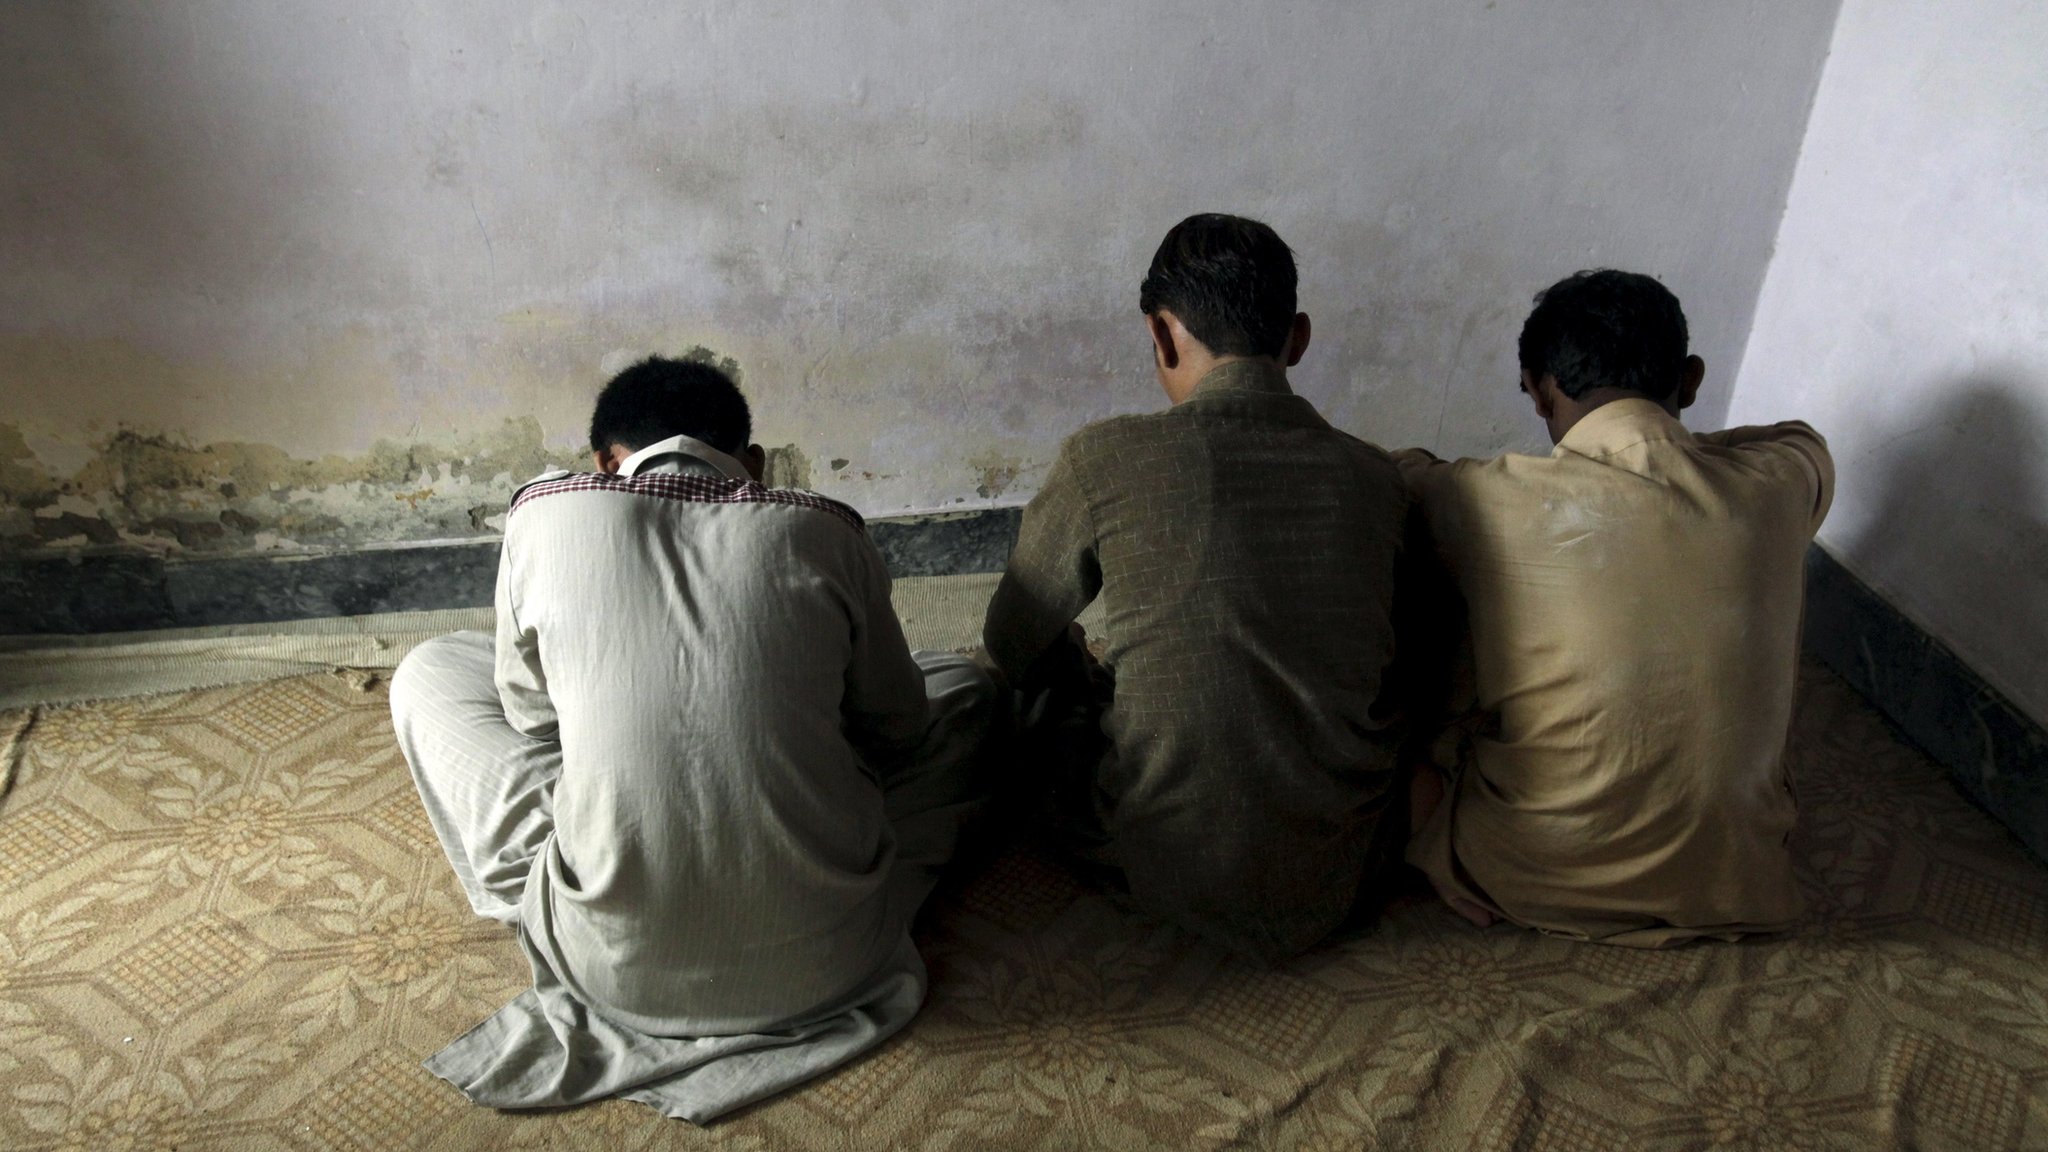 Chote Bache School Xxx Videos - Pakistan child sex abuse: Seven arrested in Punjab - BBC News